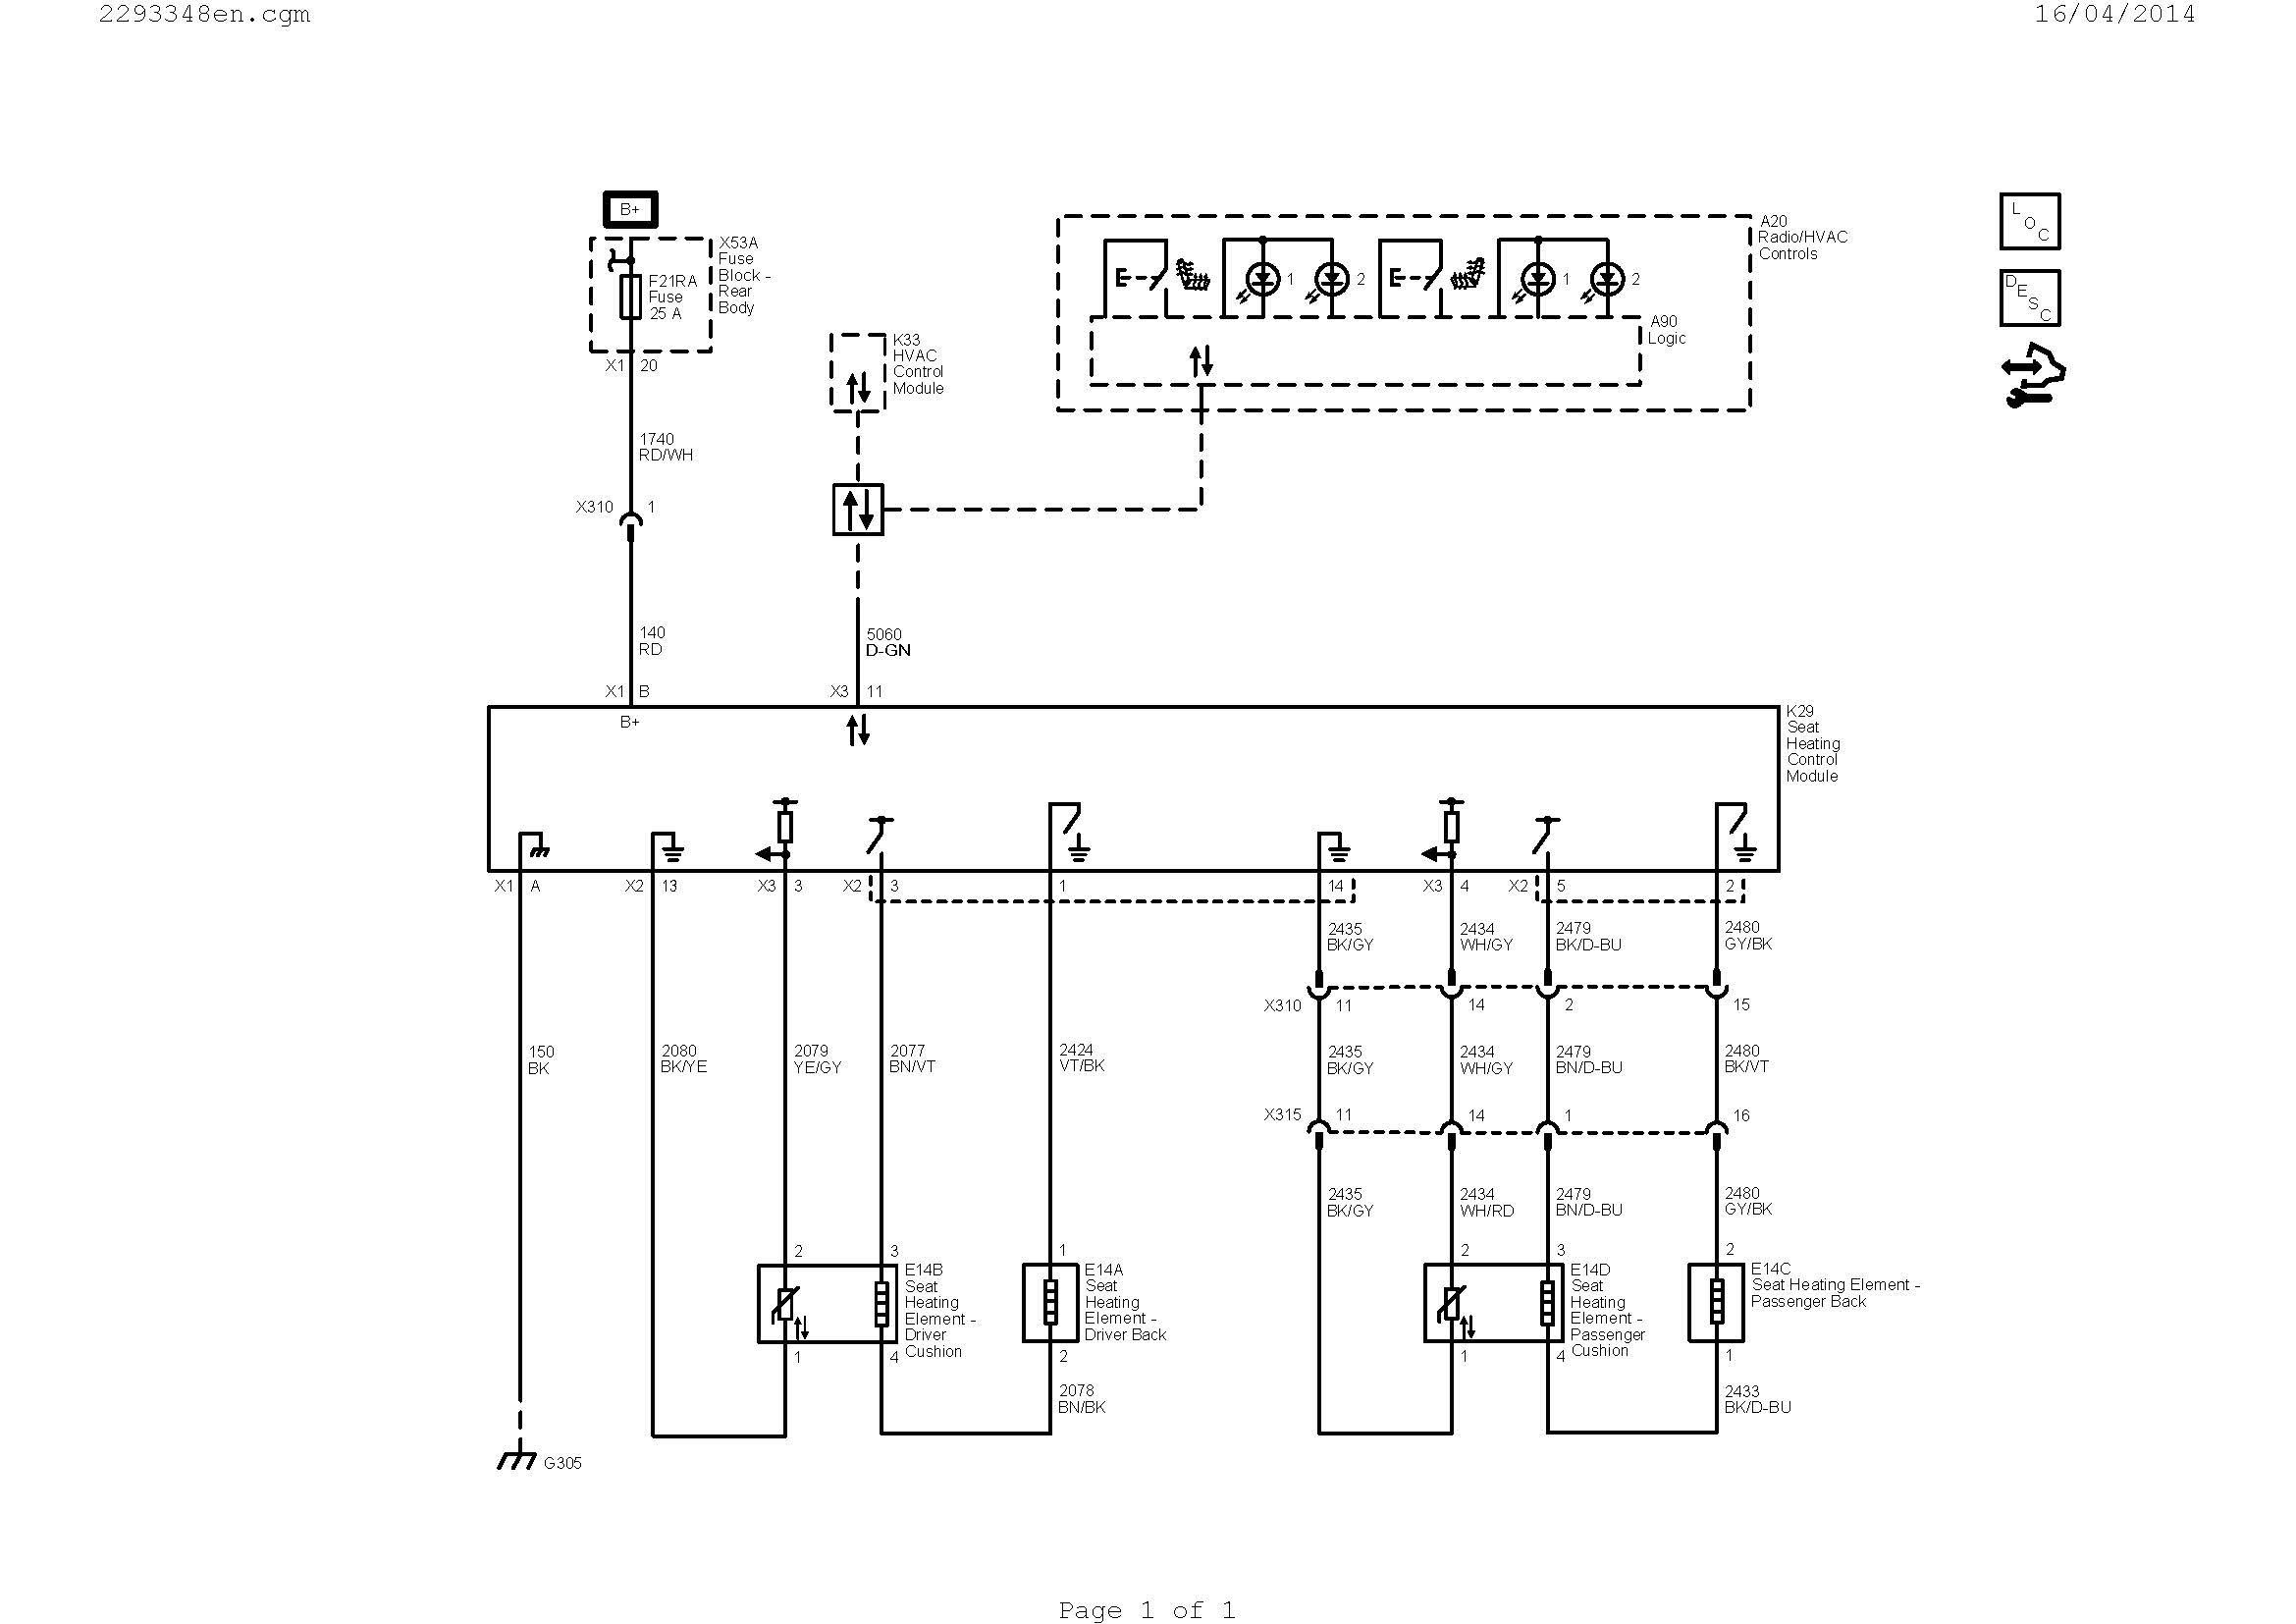 Hvac Wiring Diagram software Wiring Diagrams for Electrical New Wiring Diagram Guitar Fresh Hvac Diagram